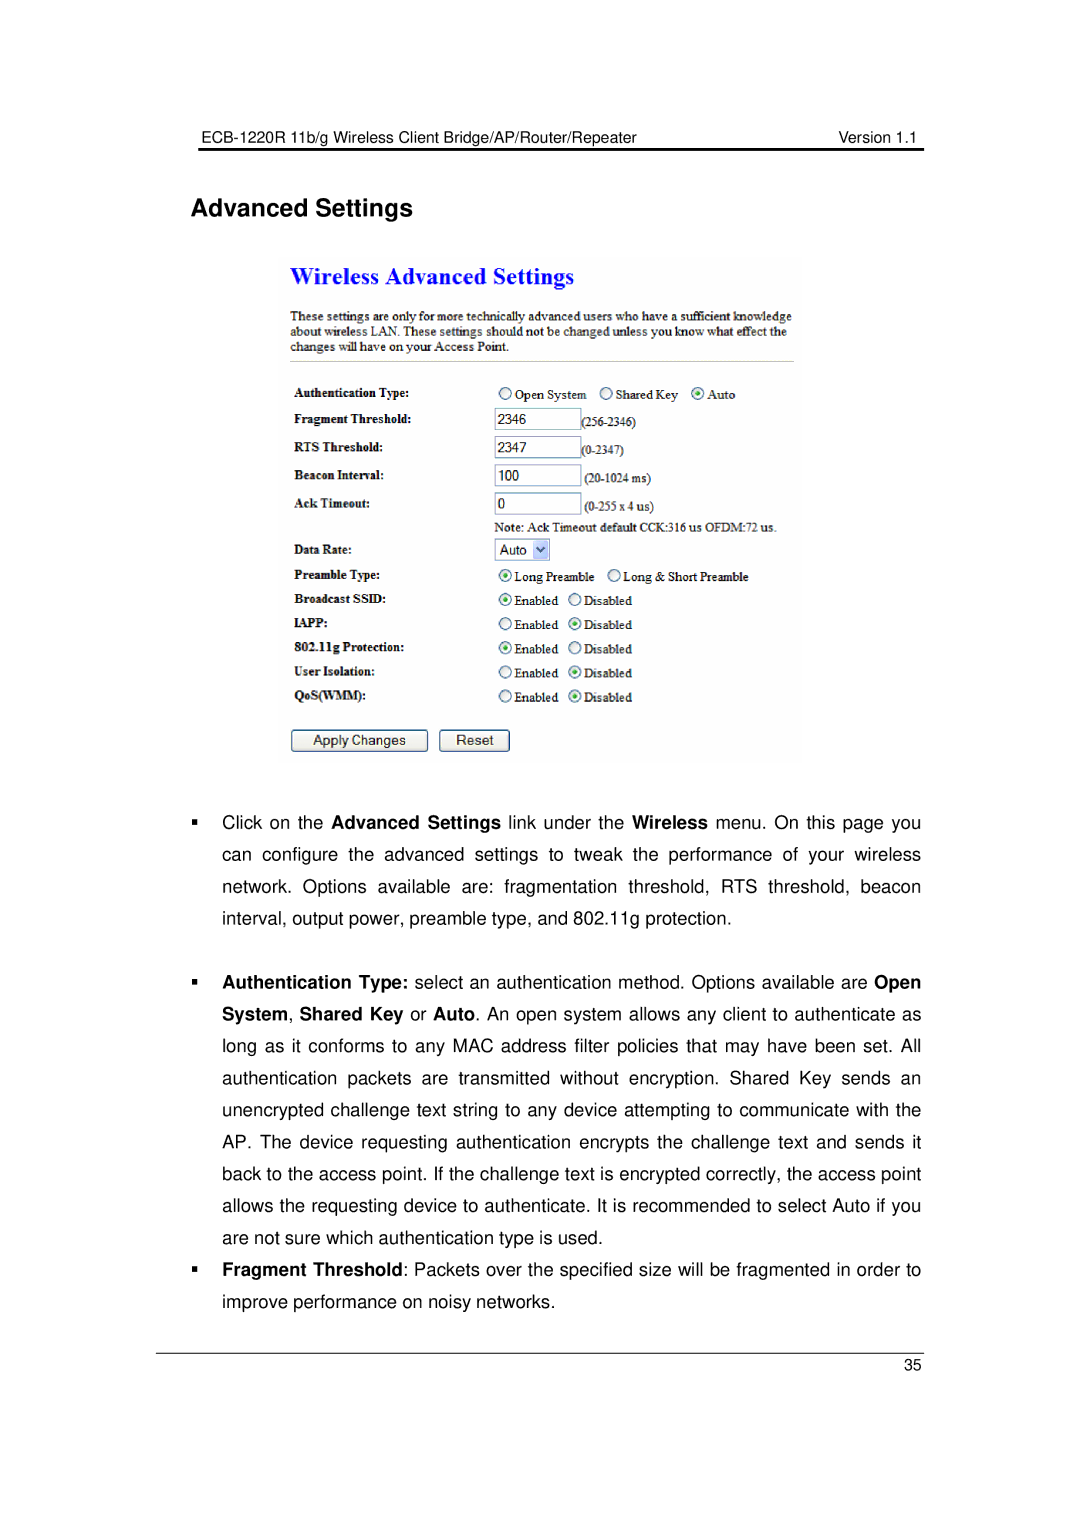 EnGenius Technologies ECB-1220R user manual Advanced Settings 